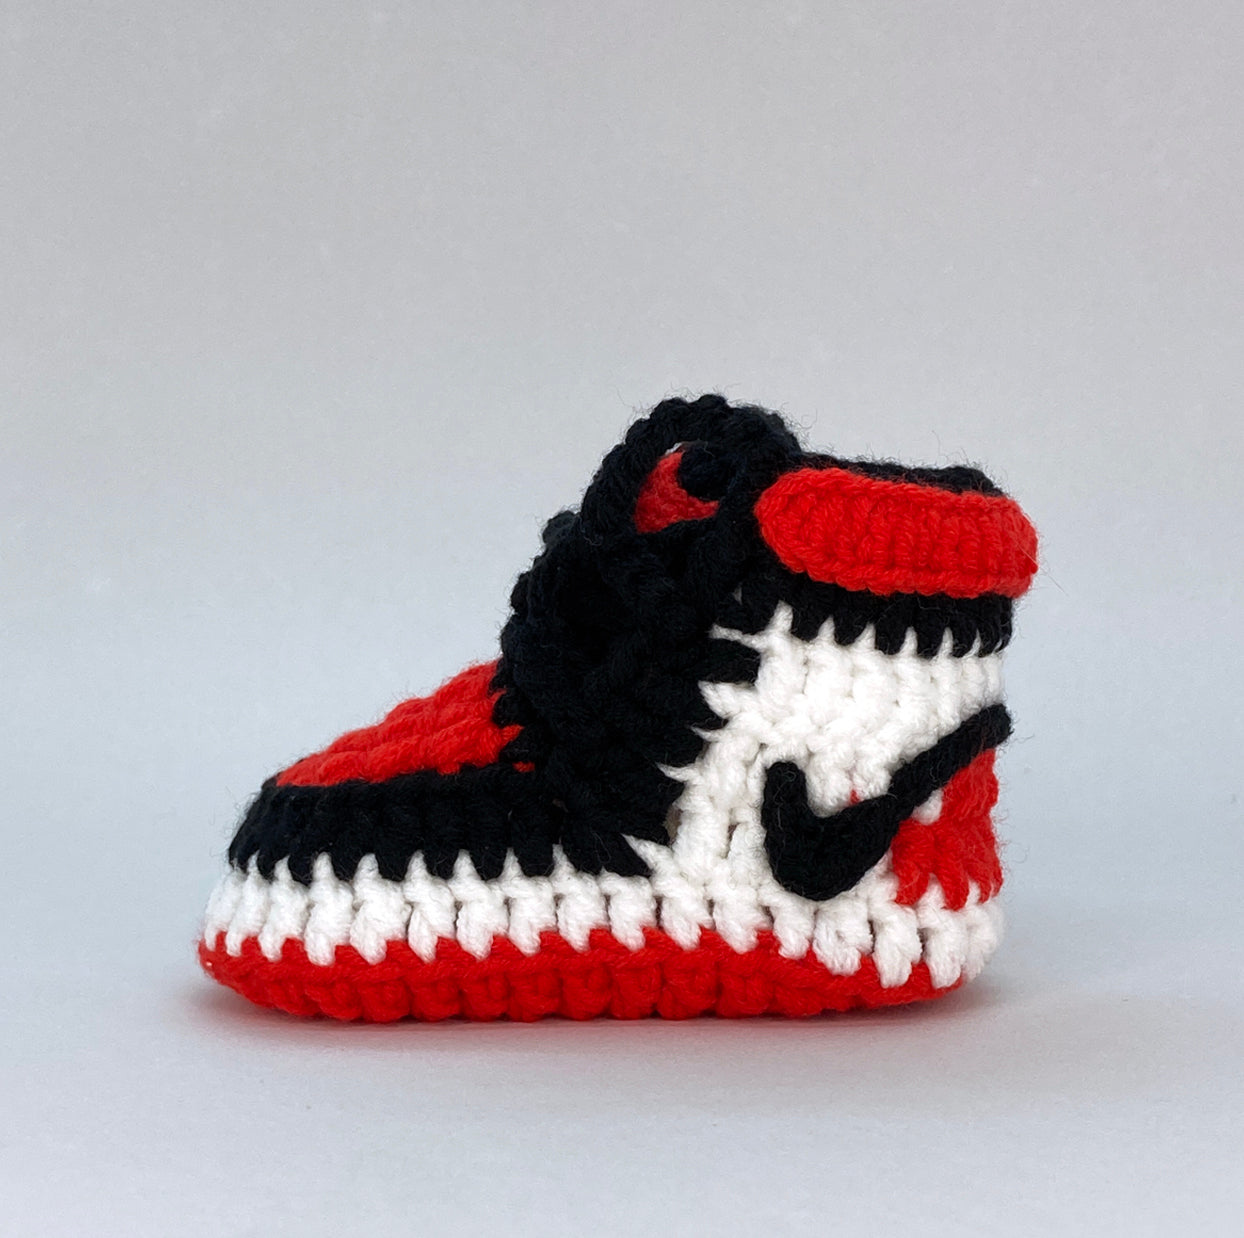 baby crochet sneakers AJ1 Chicago